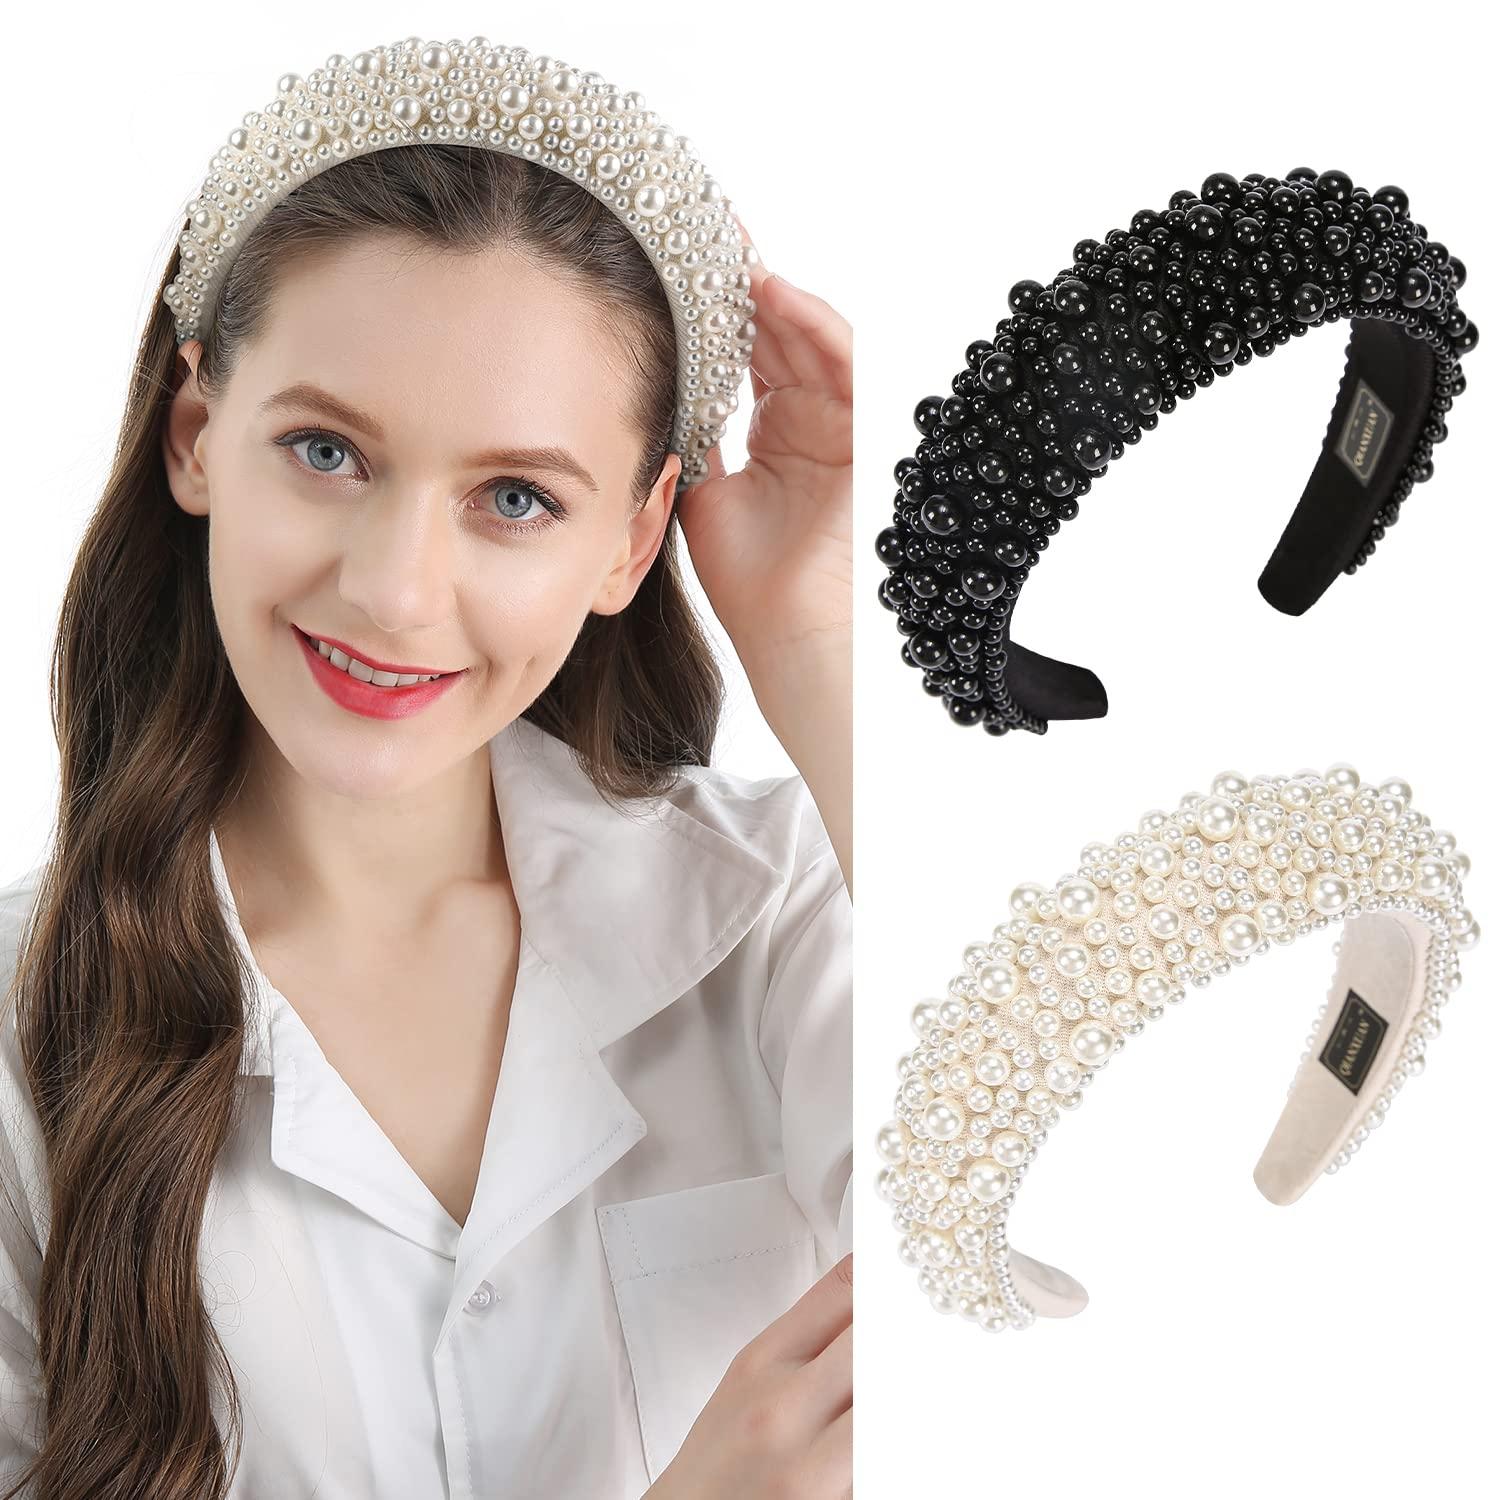 Pearls Hair Accessories